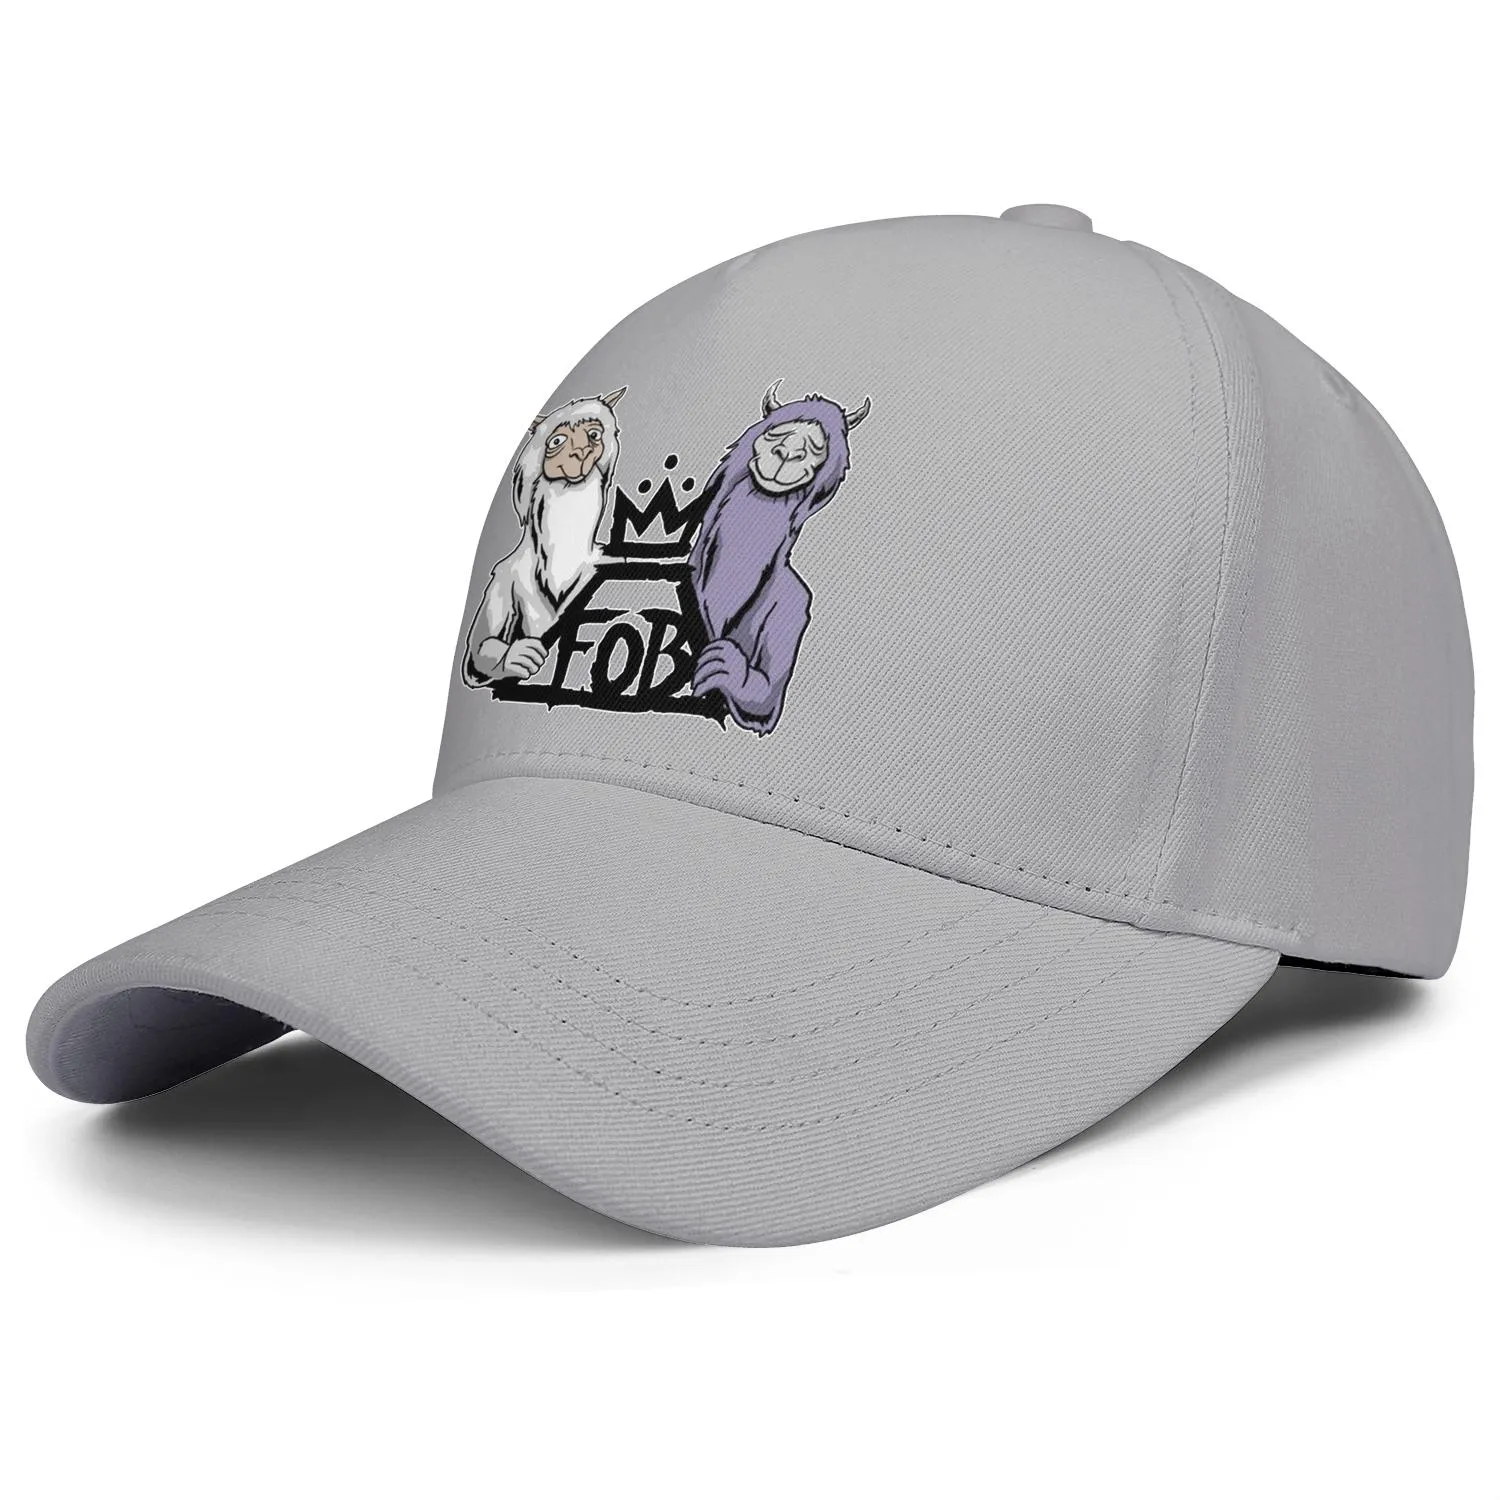 men039s و women039s capball Caps Custom Graphics Fashion Hat Hat Fall Out Boy Mania Funny Got Away Animal Rock AN4792786